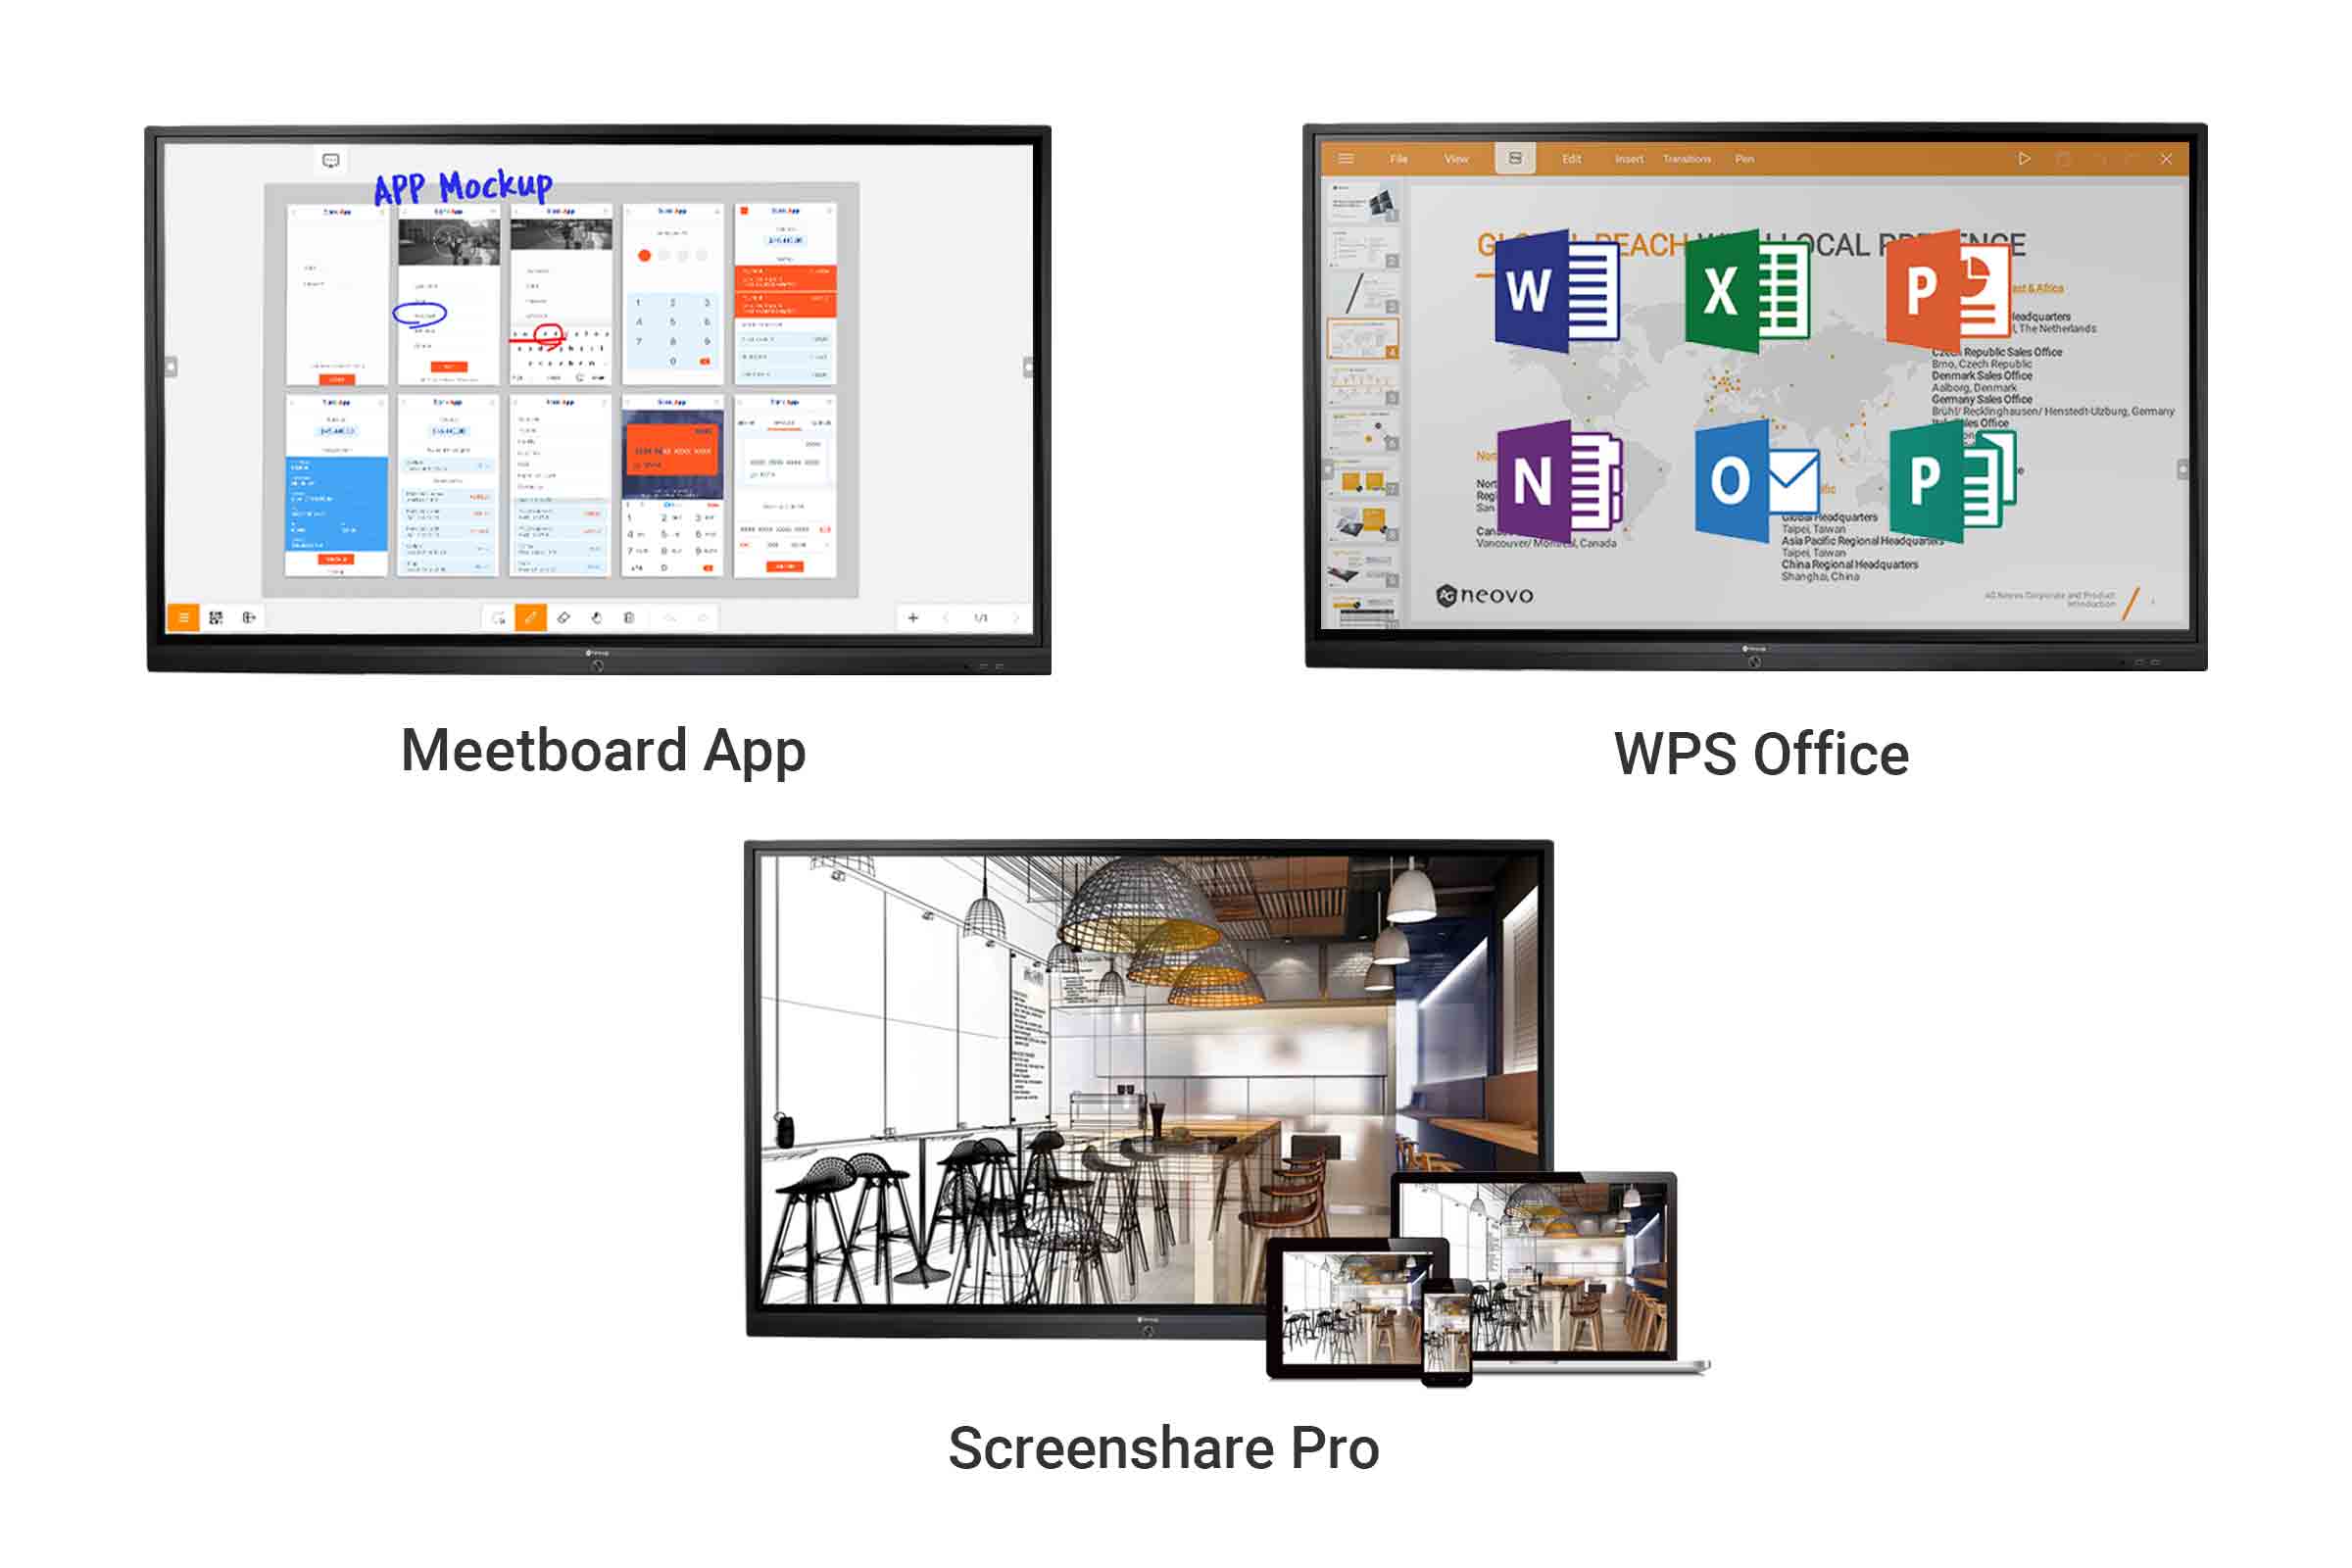 Meetboard Interactive Flat Panel Display integrates various apps